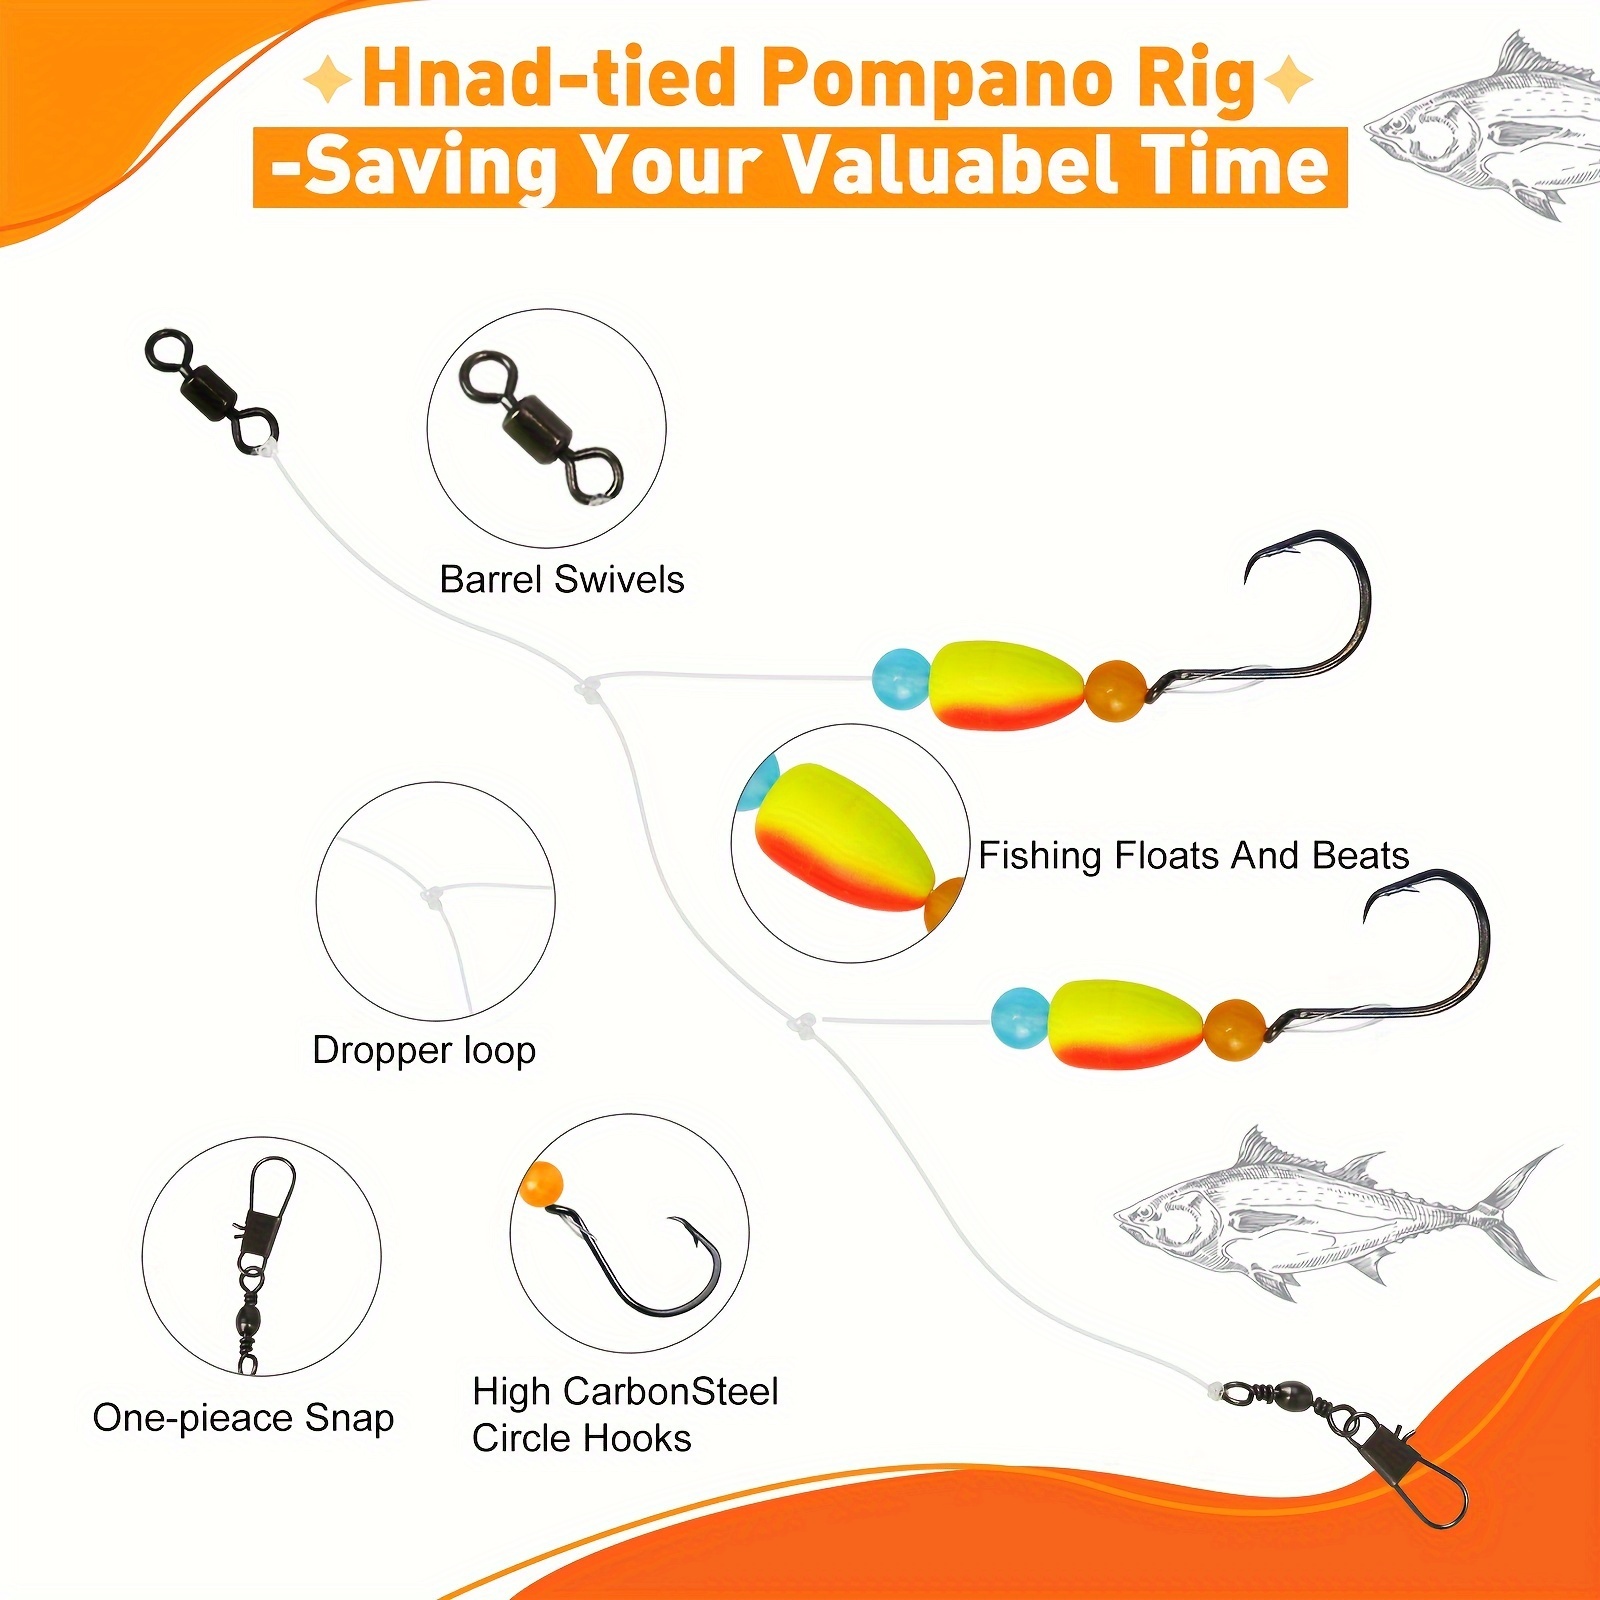 5Packs Pompano Rigs for Surf Fishing Rig 3 String Circle hooks